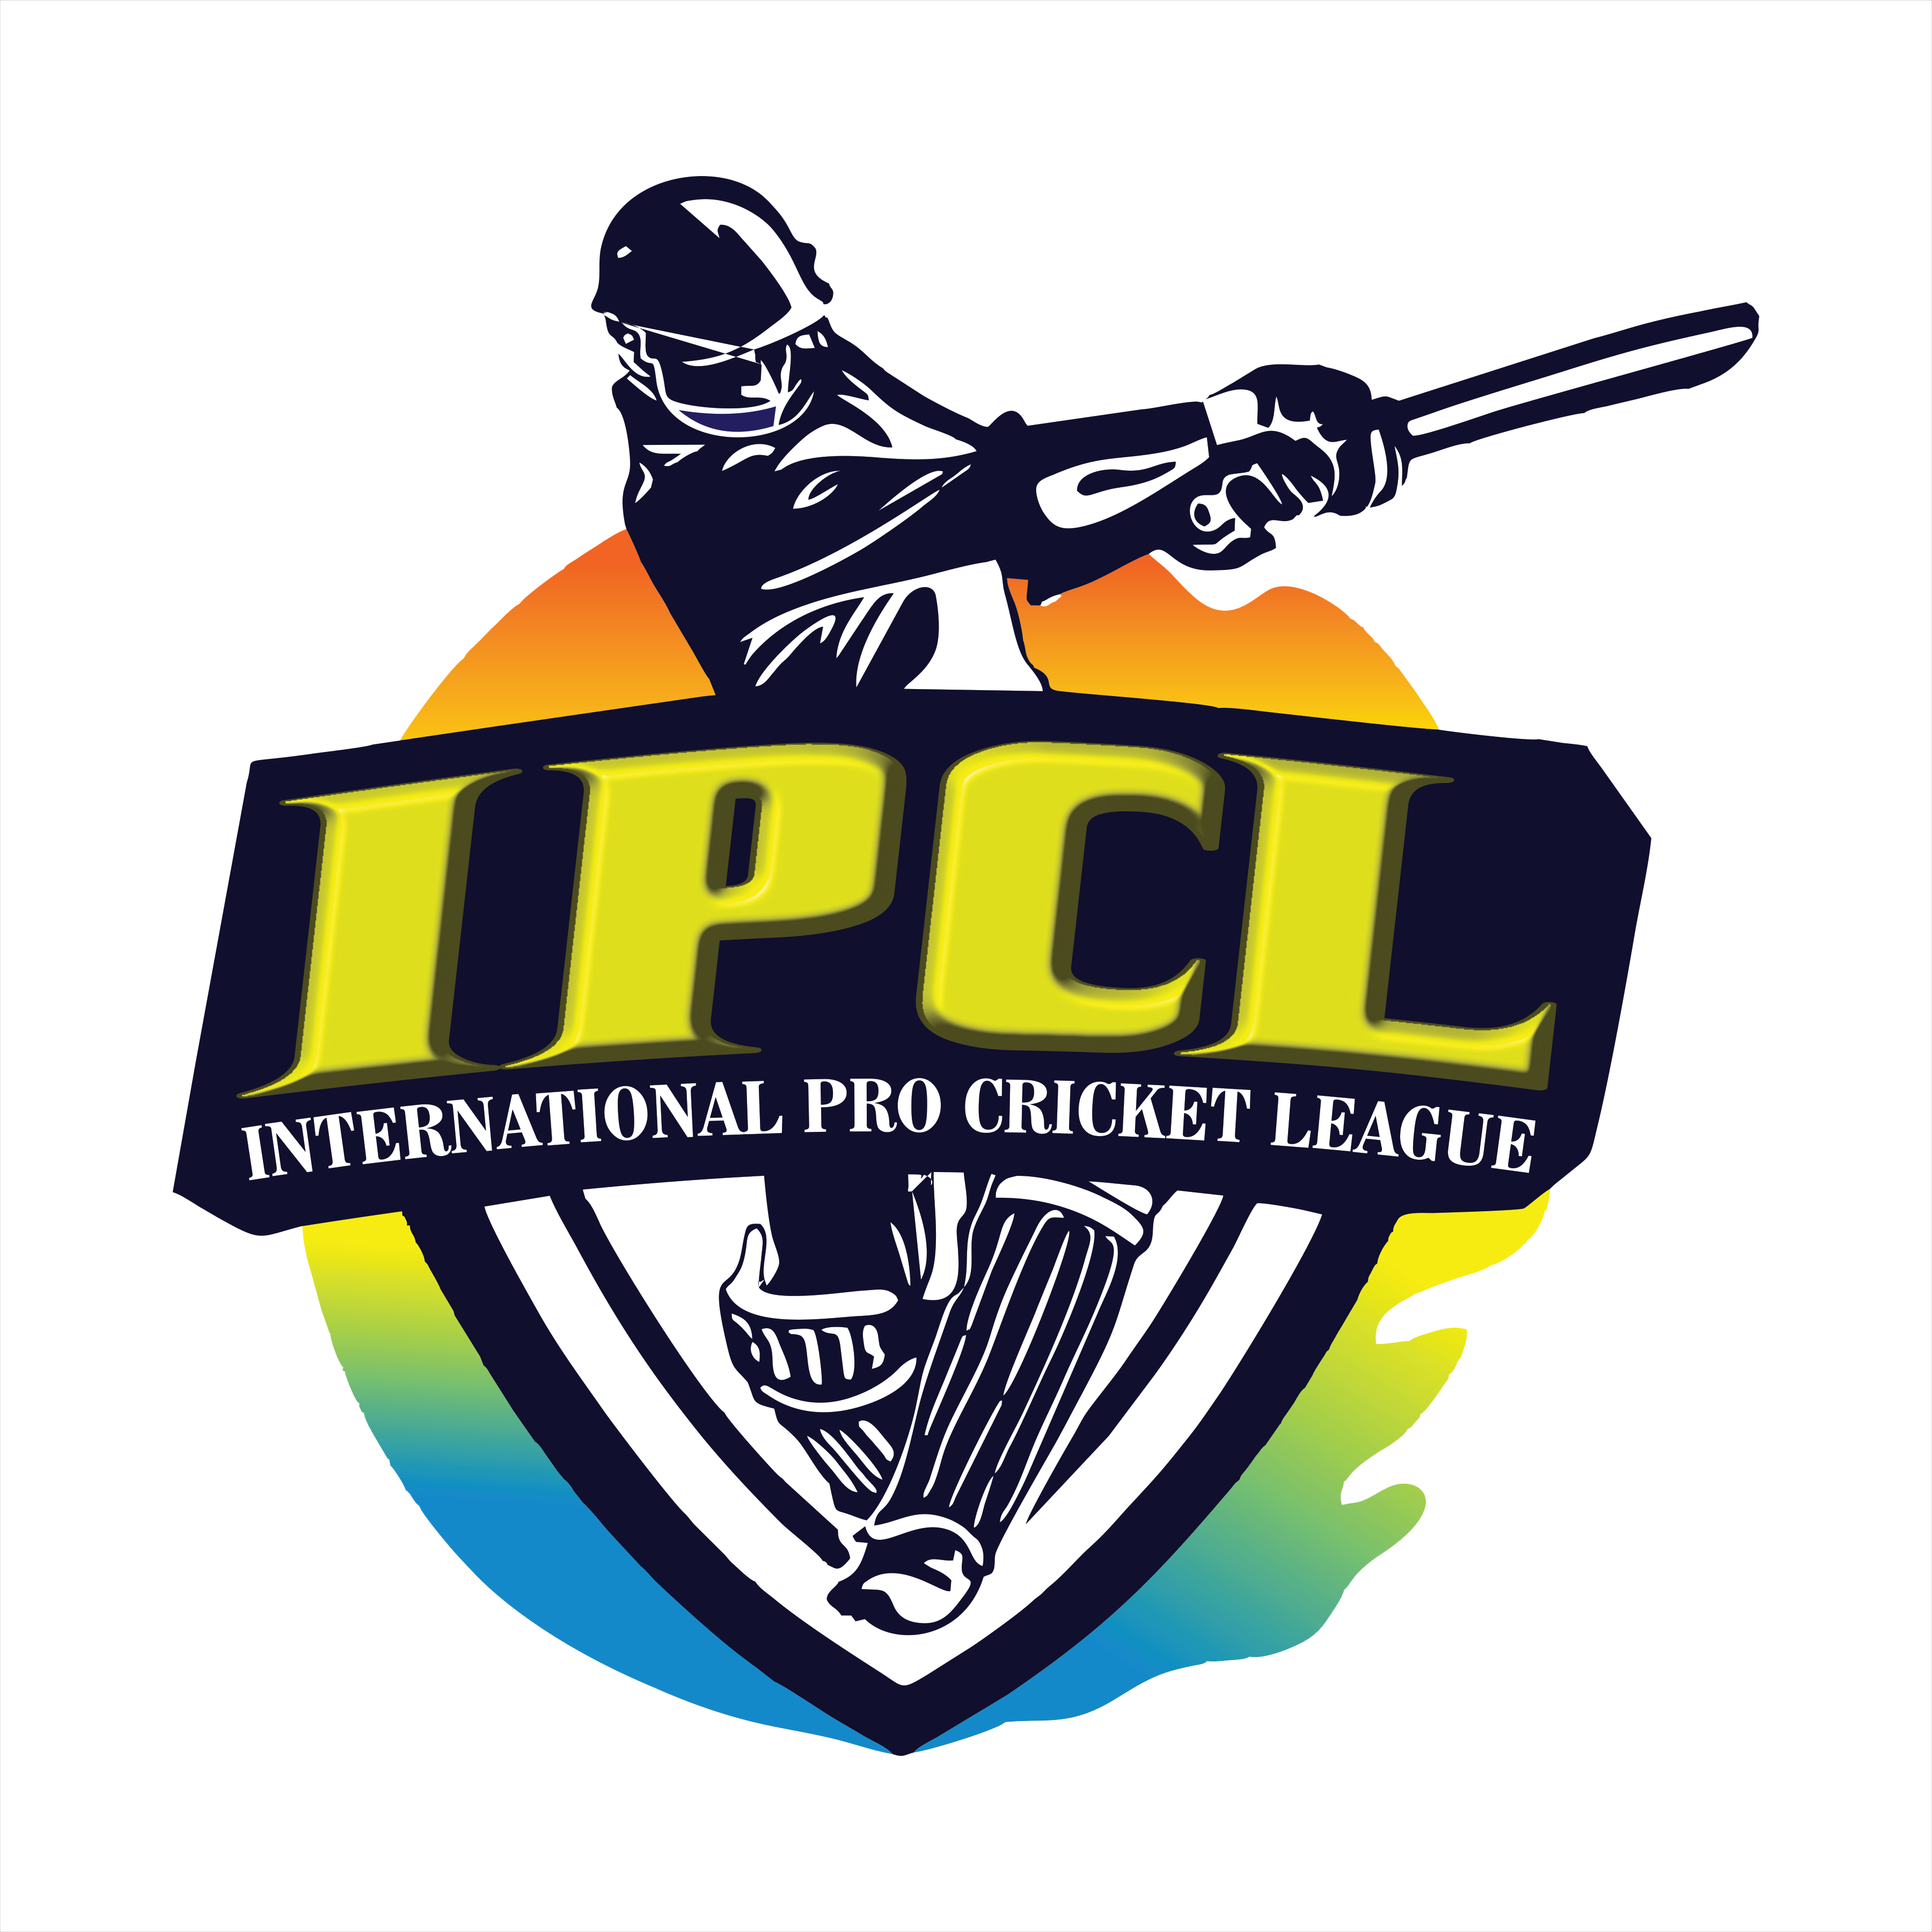 IPCL International Pro Cricket Leaue – IPCL International Pro Cricket Leaue